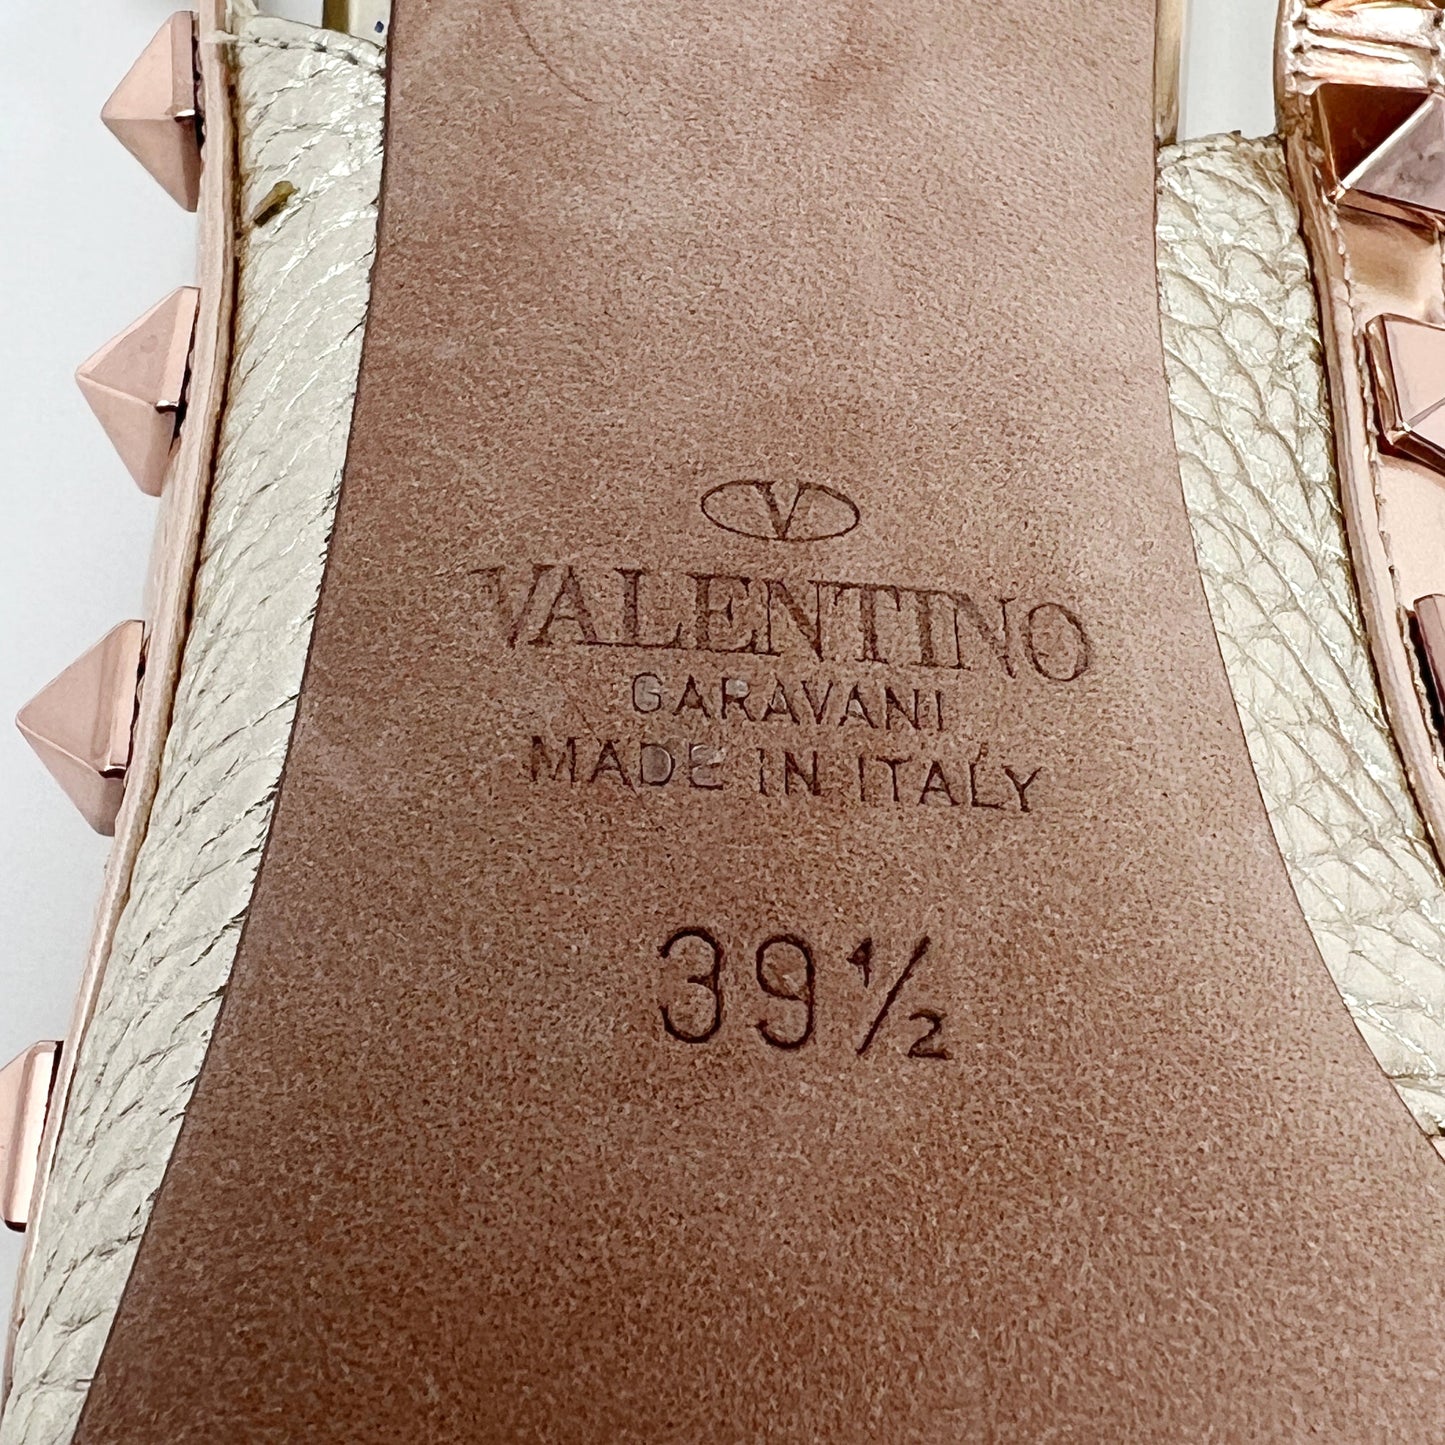 Valentino Garavani Rockstud 100 Gold/ Rose Gold Multistrap Pointed Pumps Heels Size EU 39.5